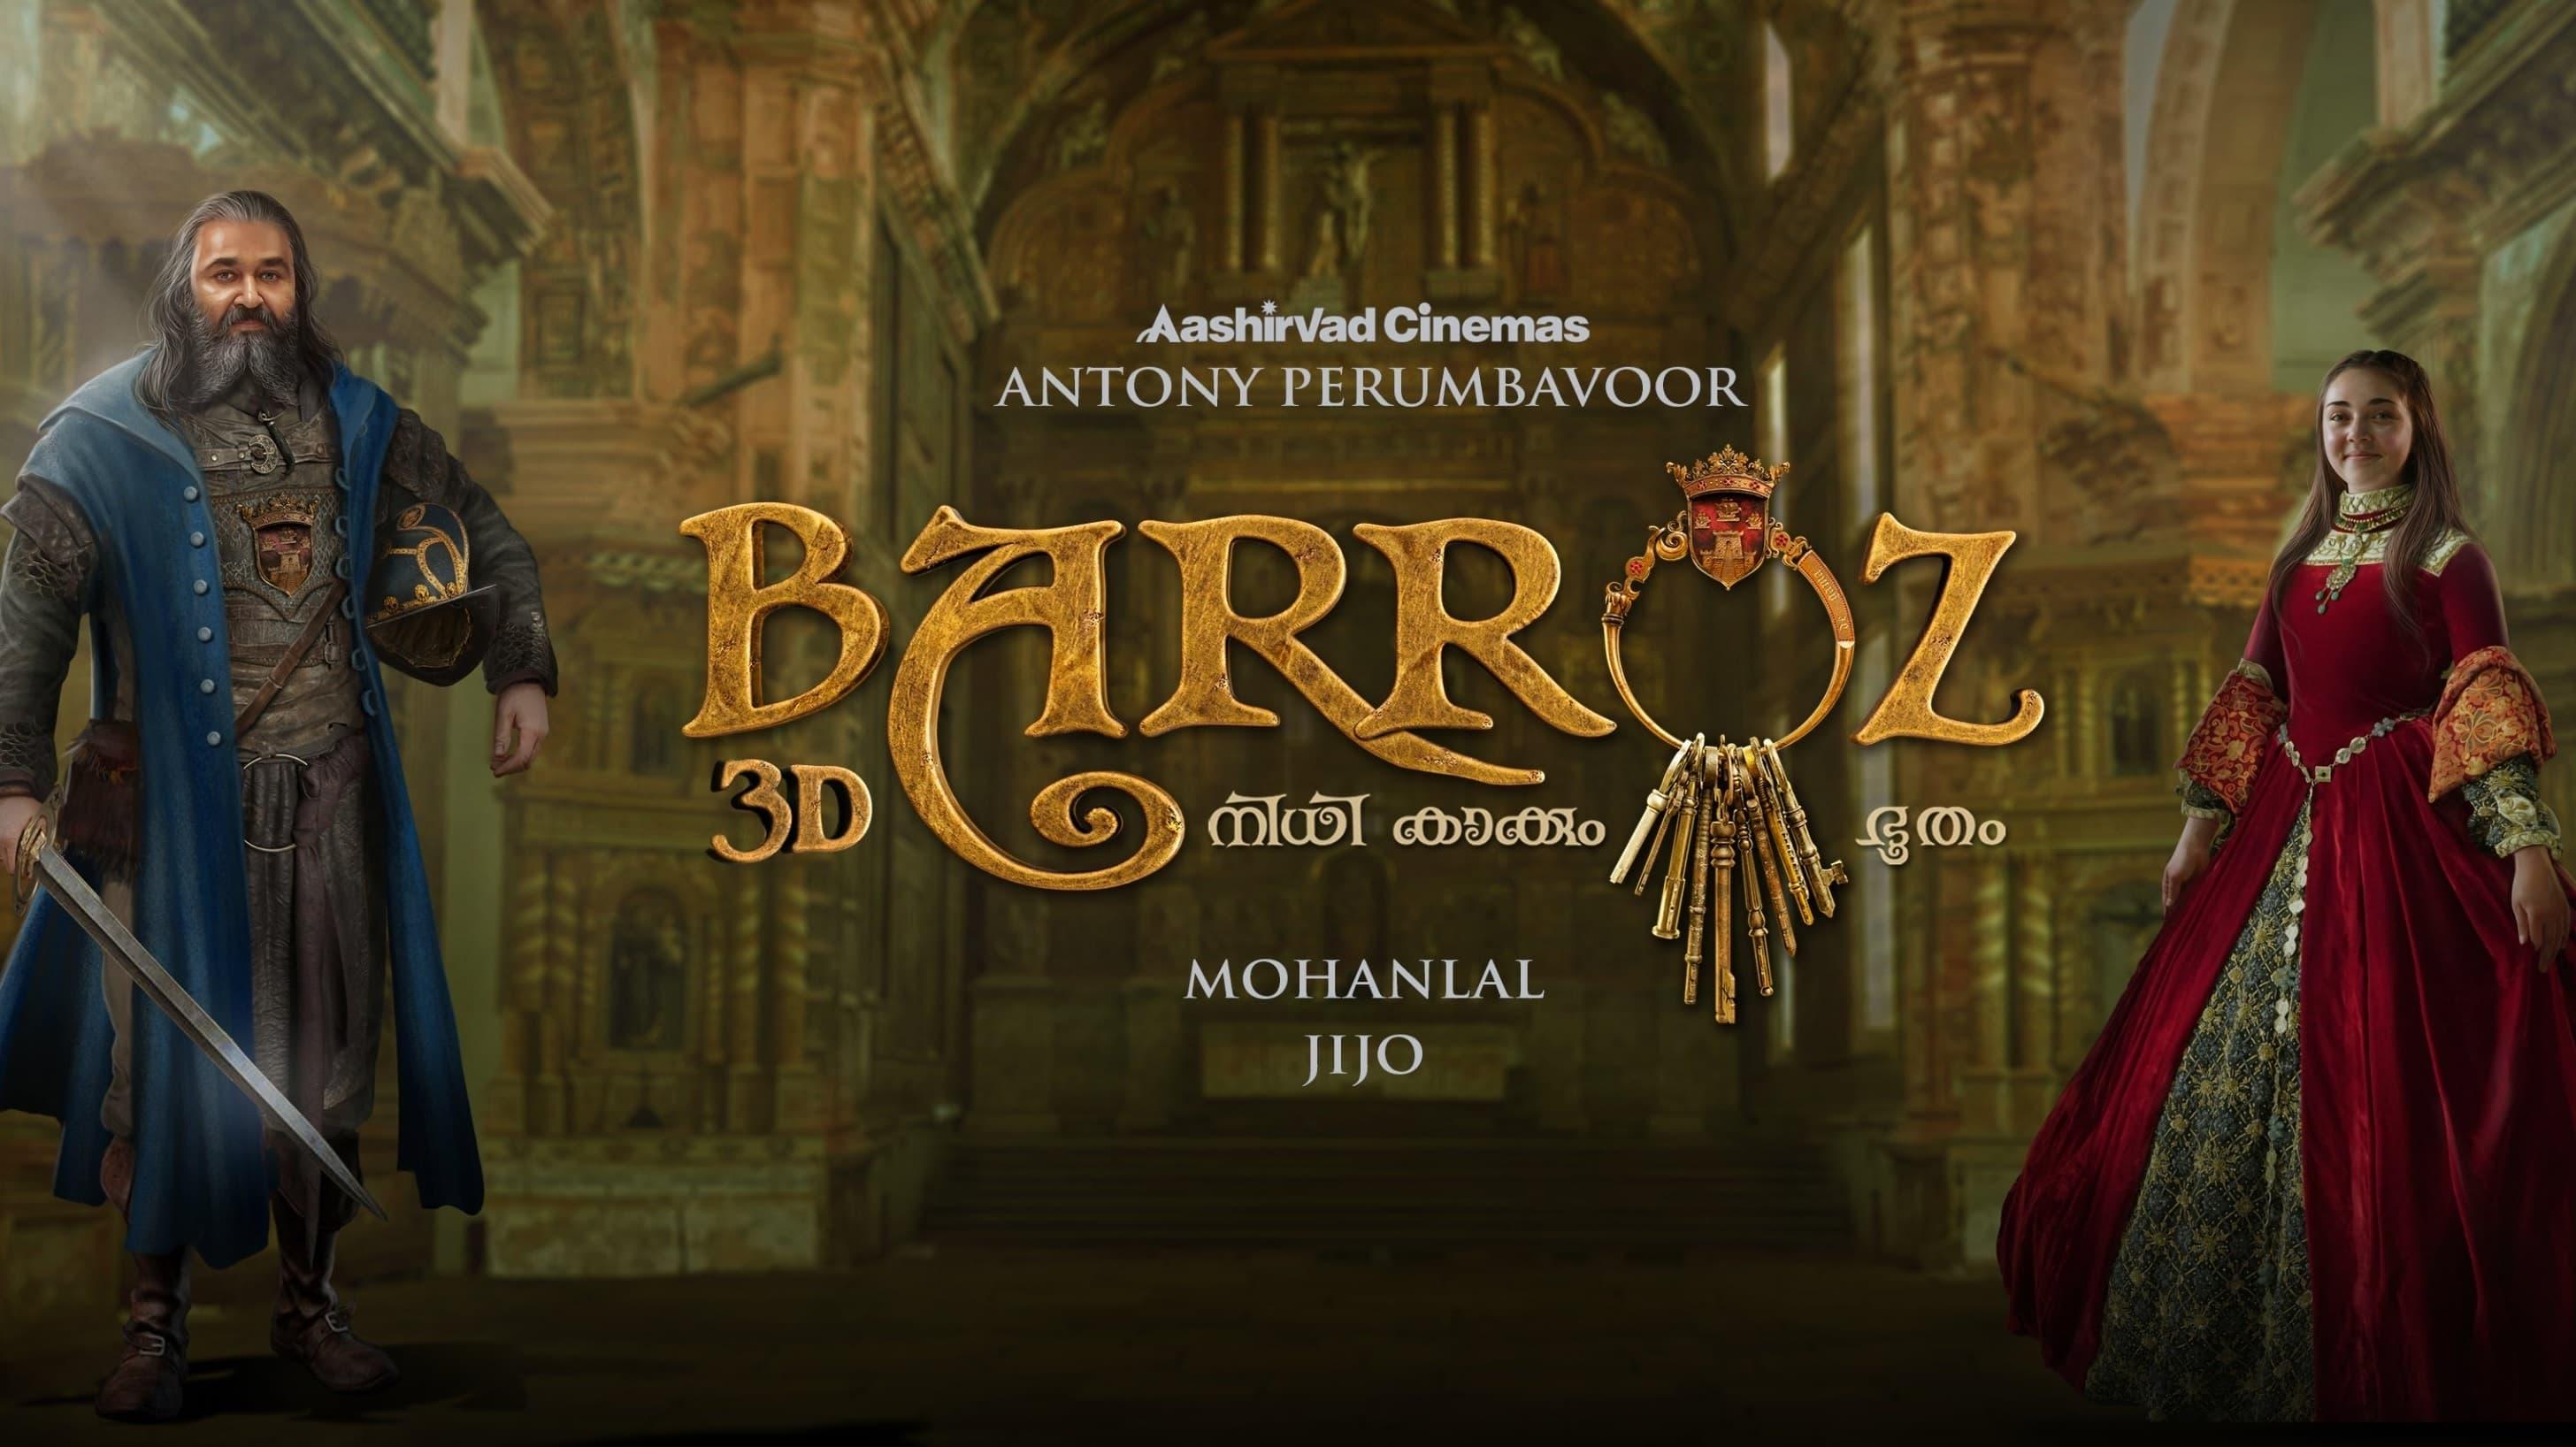 Barroz – Guardian of D'Gama's Treasure backdrop